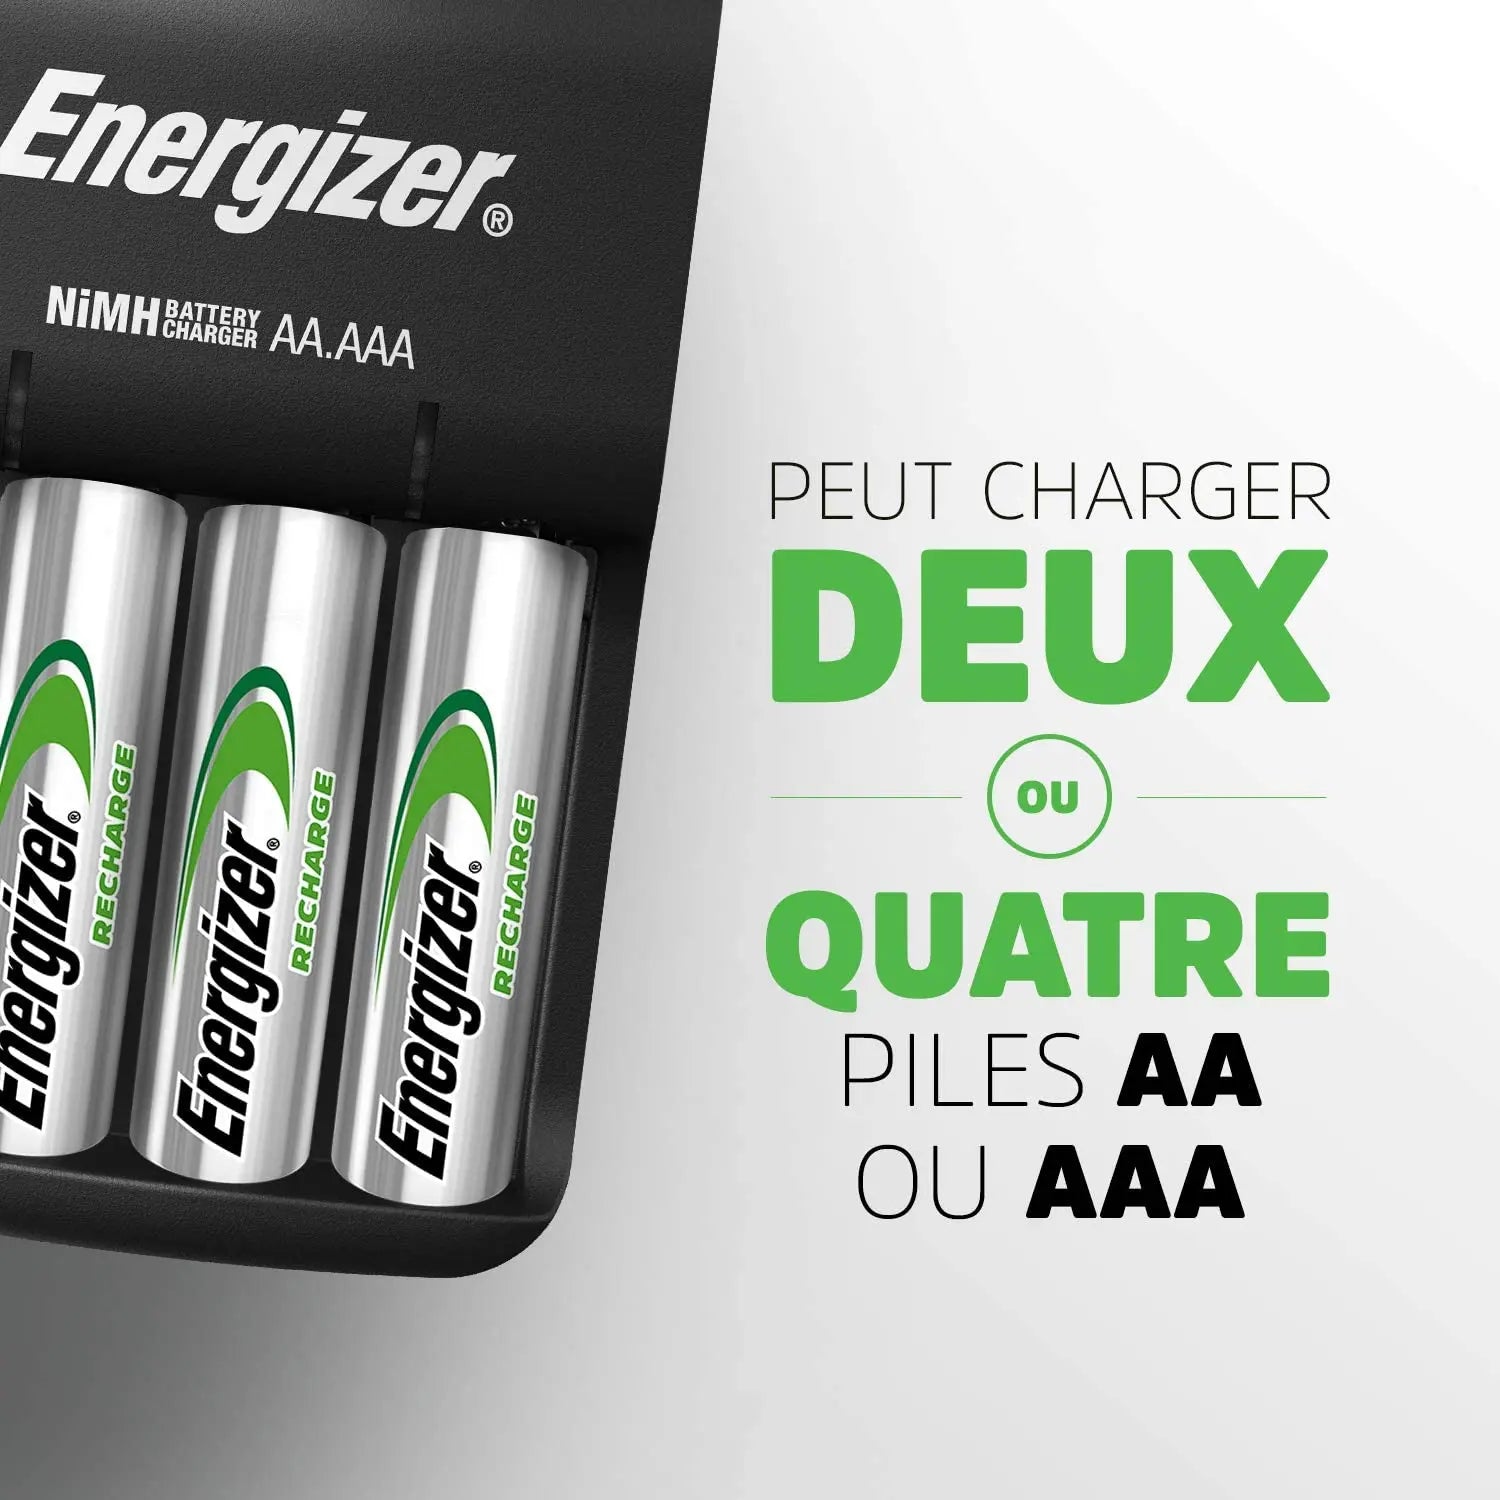 Energizer Extreme Recharge Batteries - AA & AAA EU